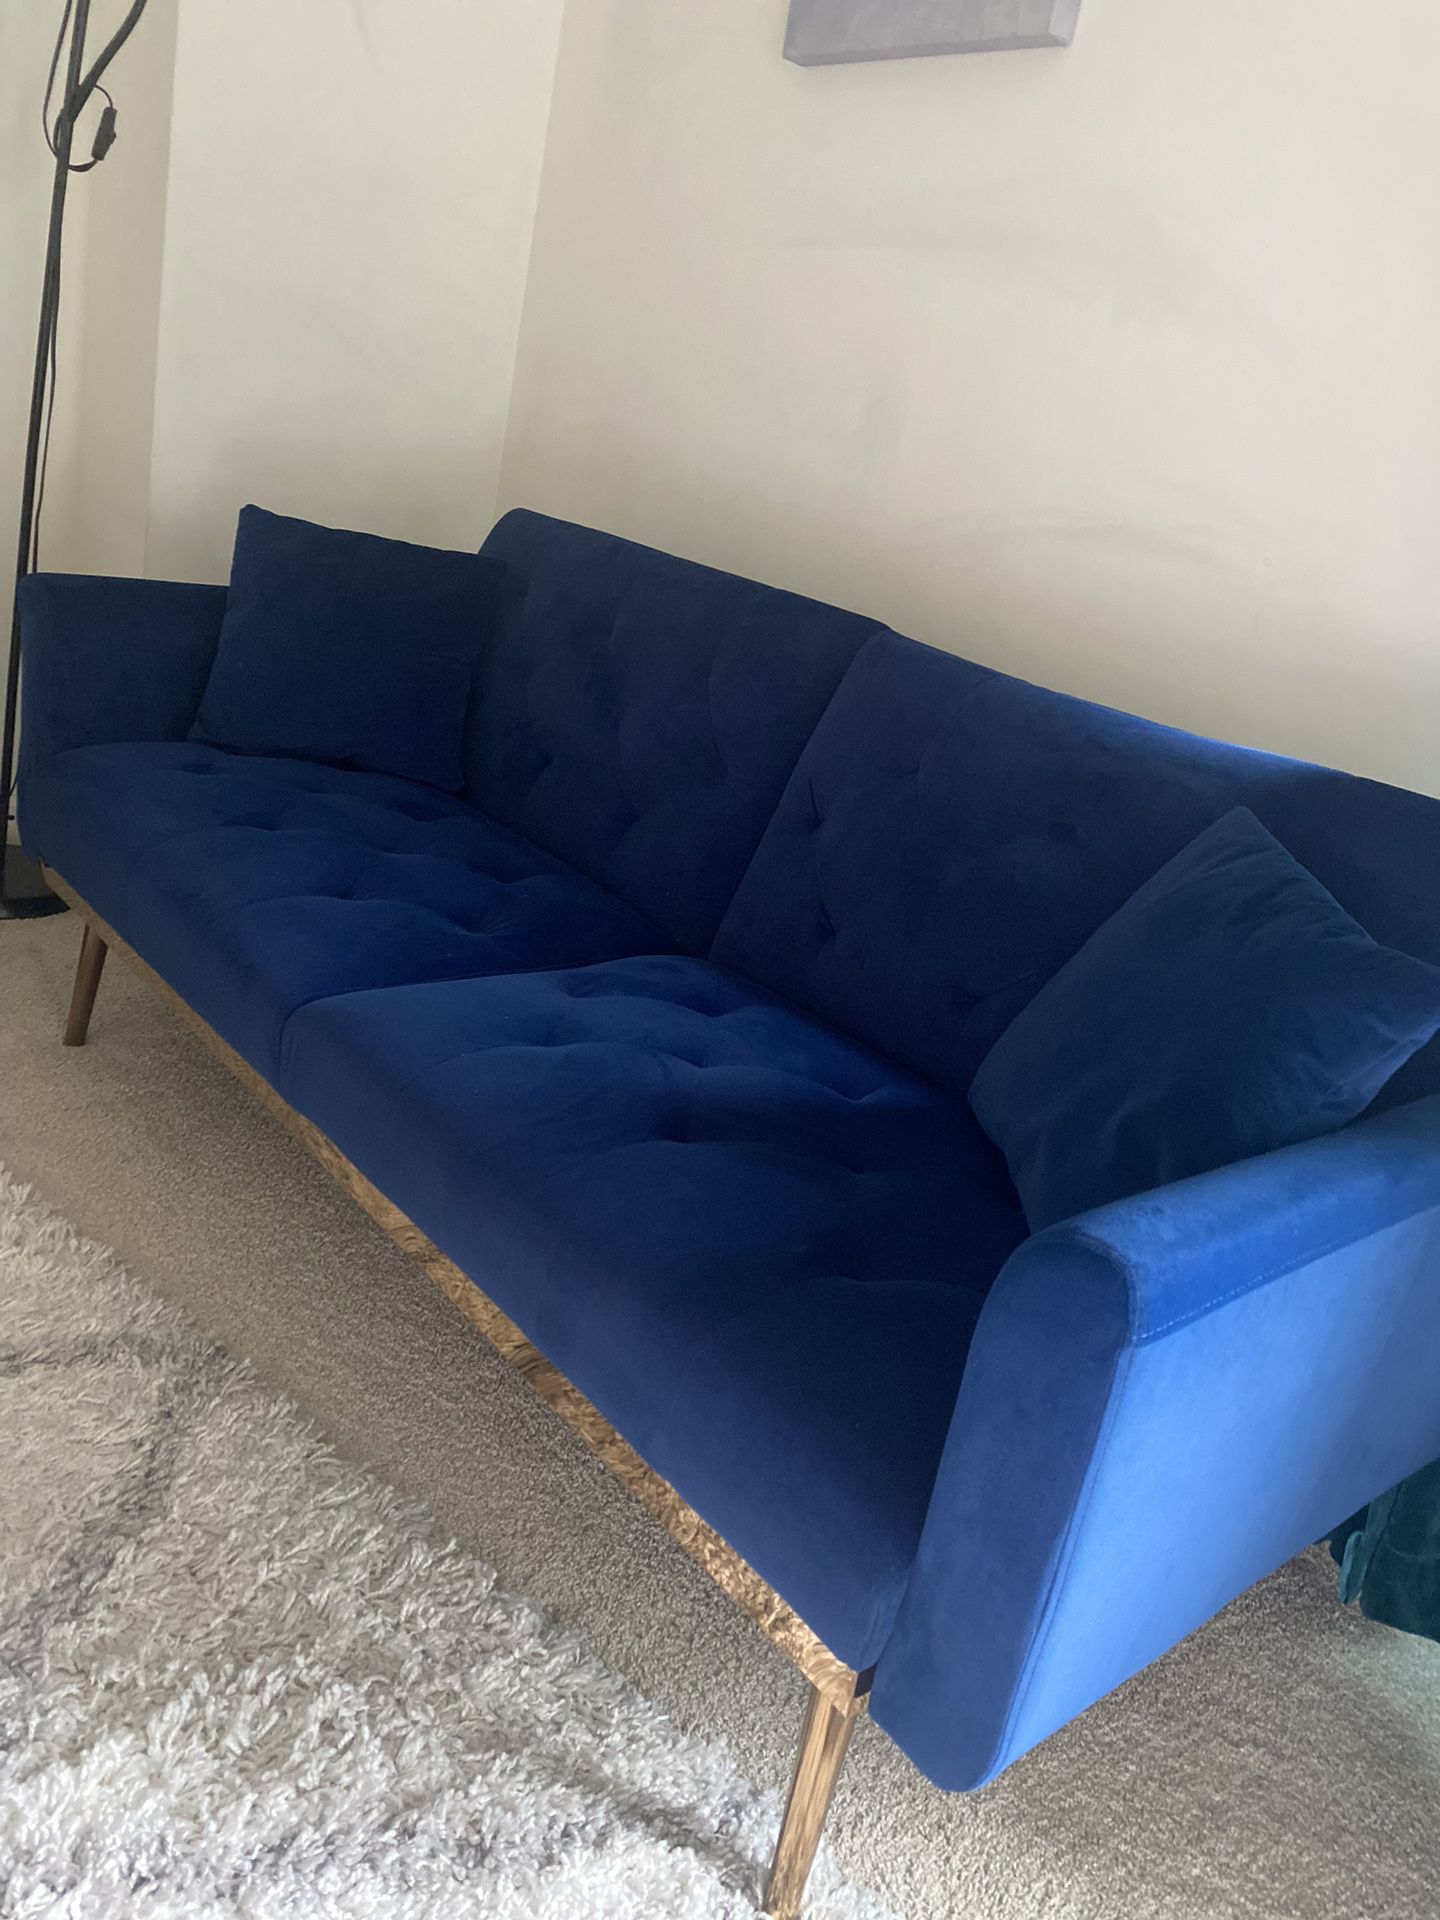 Futon Bed Sofa Like New 